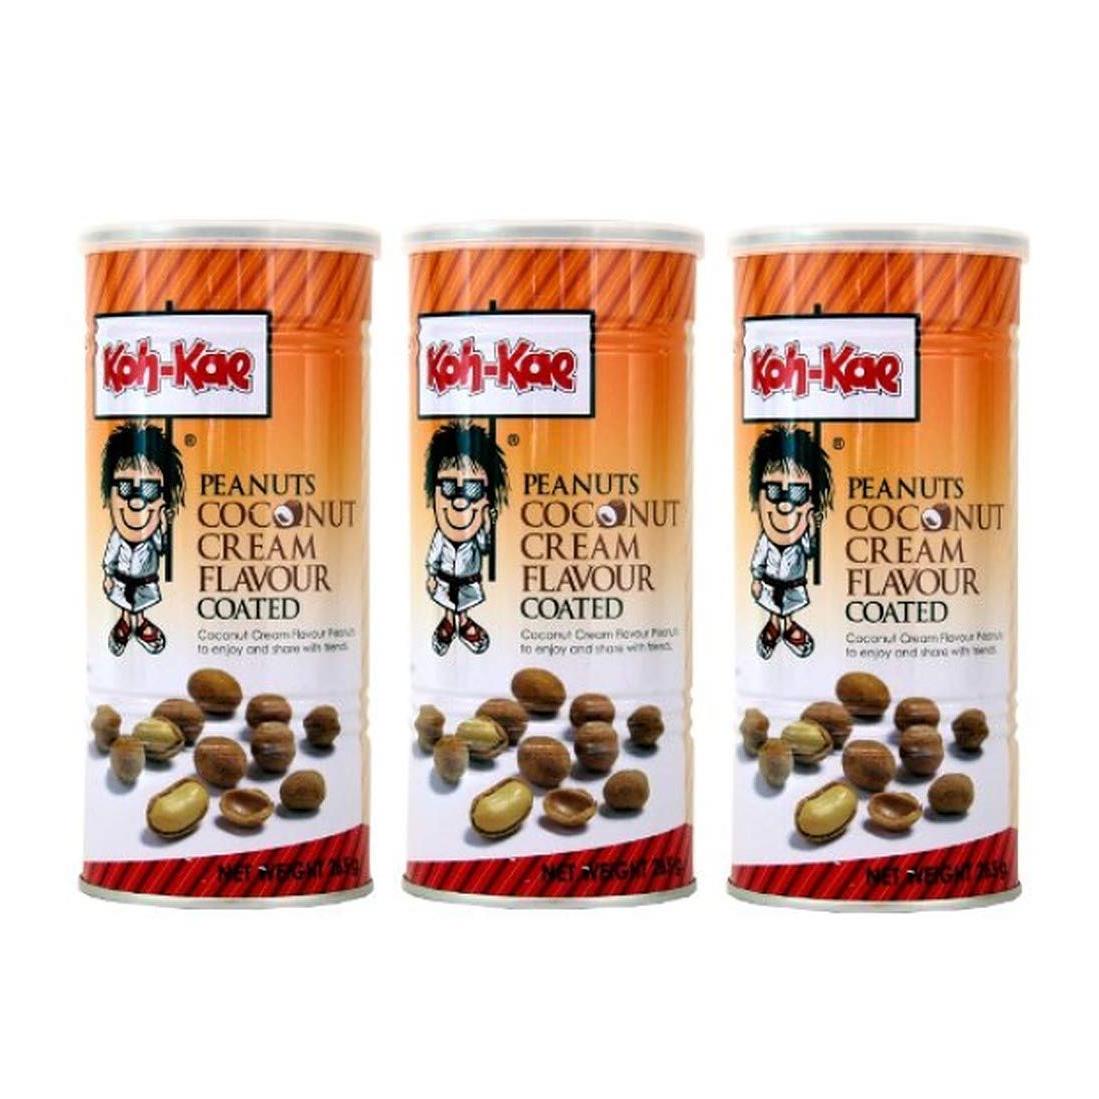 Koh-Kae Coconut Cream Flavored Peanuts (3 Pack, Total of 24.33oz)